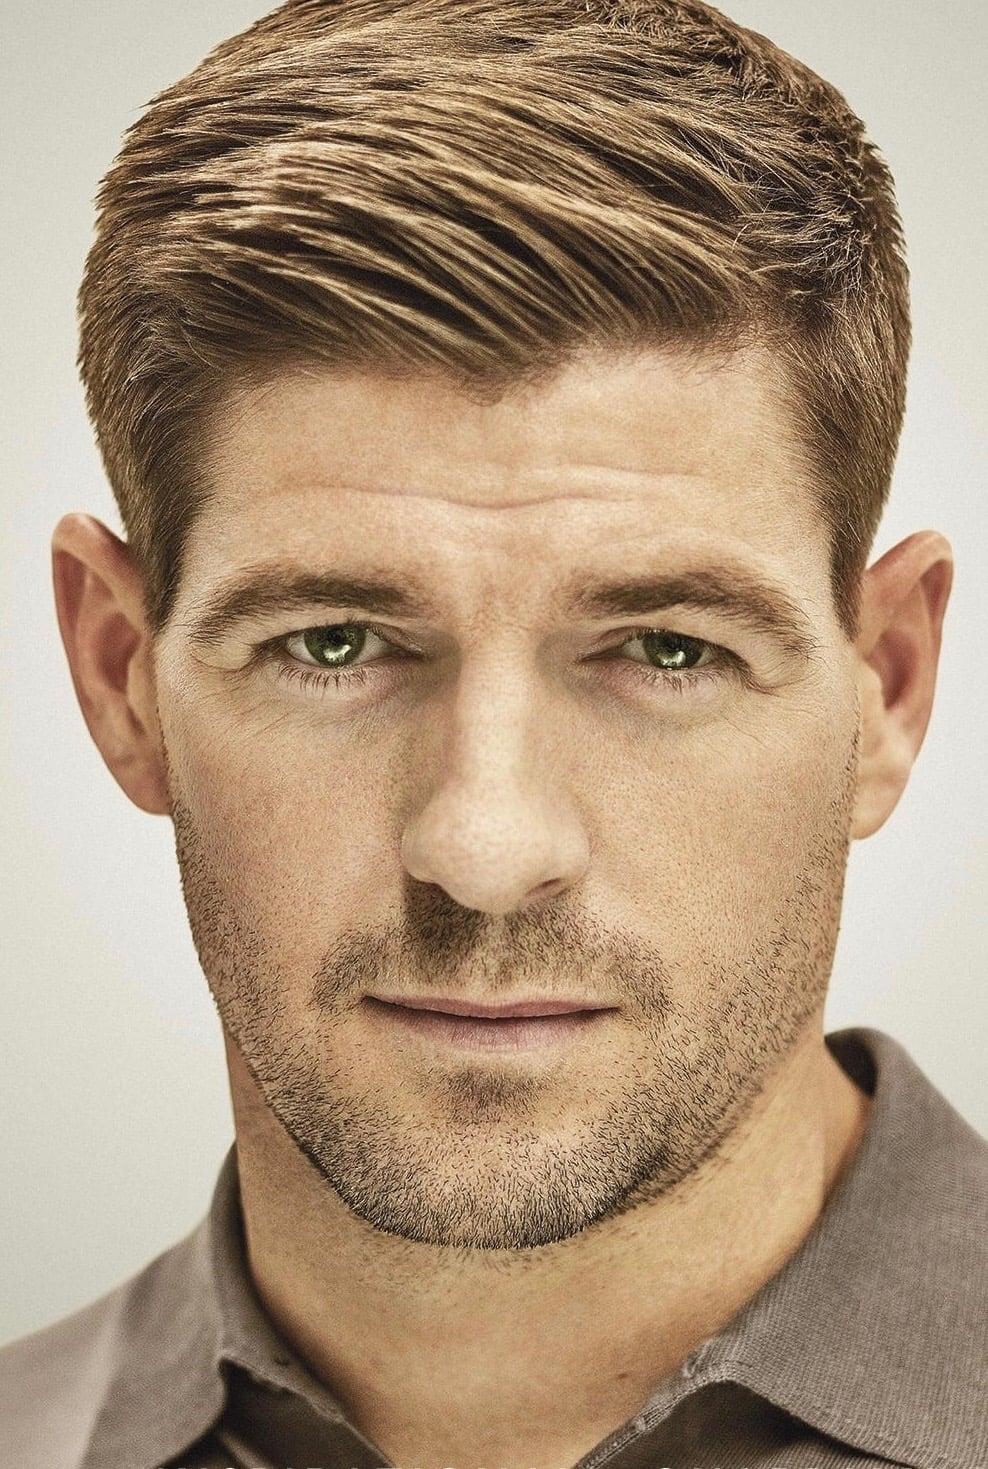 Steven Gerrard poster